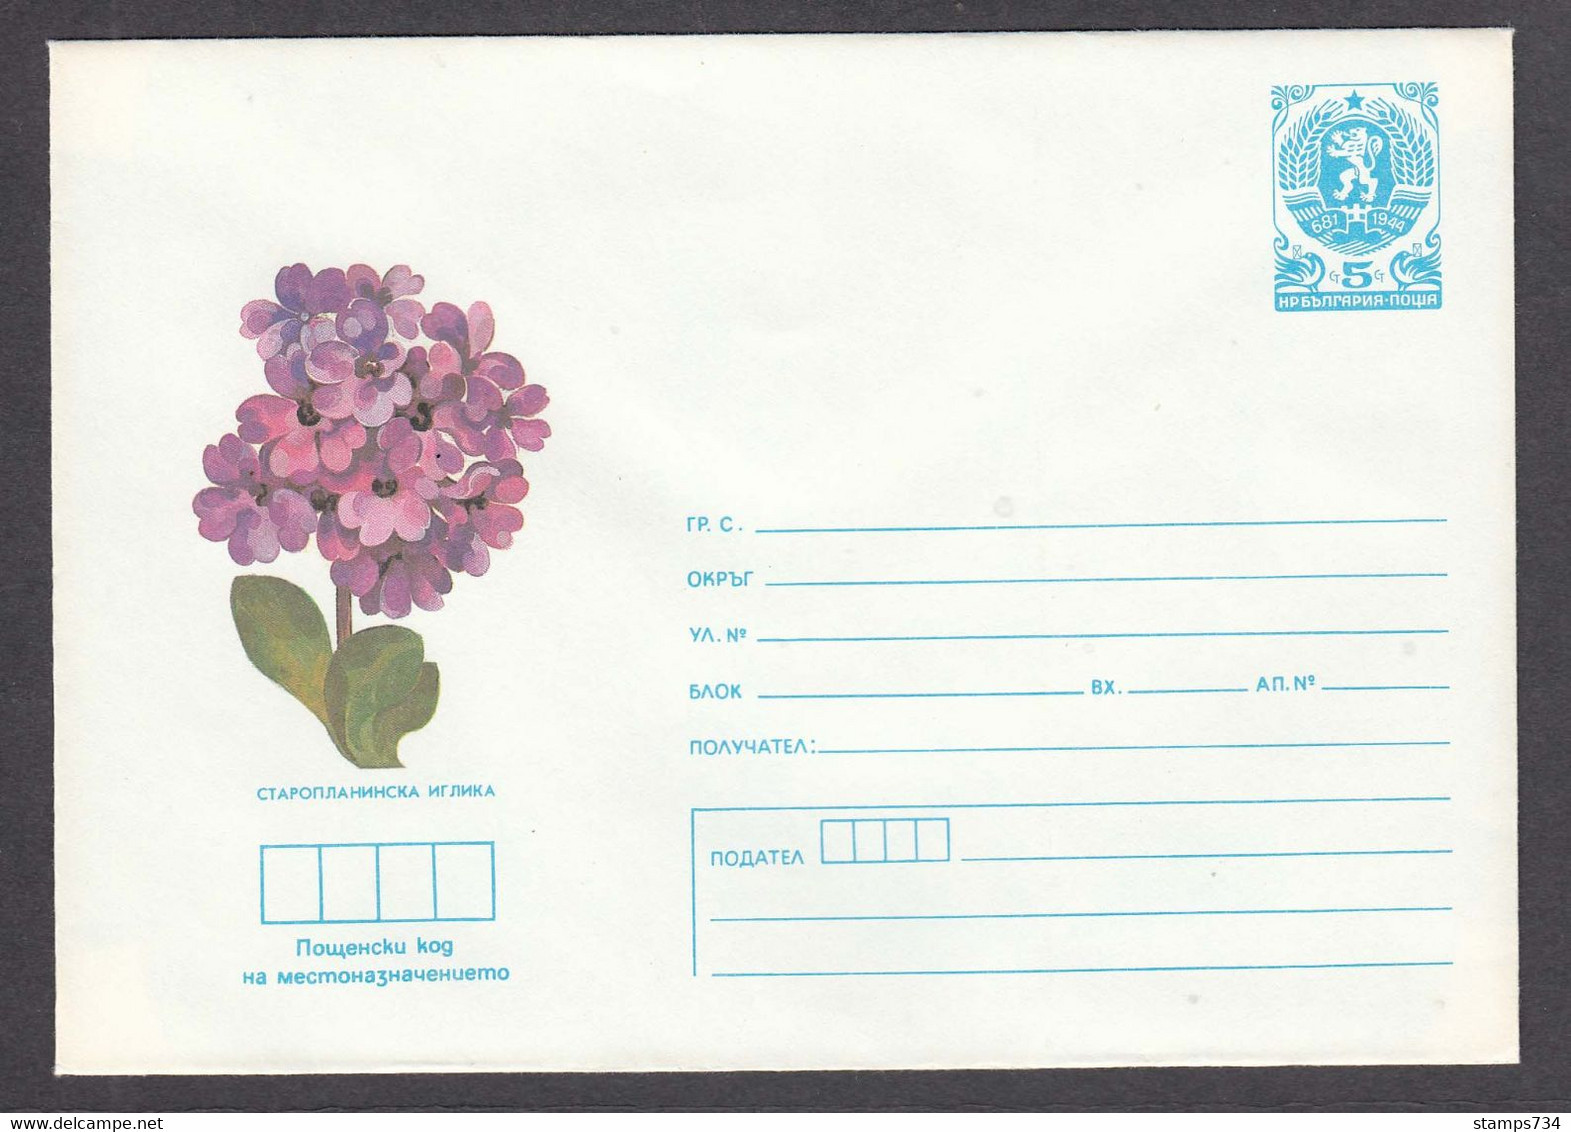 PS 885/1987 - Mint, Flower: Stara Planina Primrose, Post. Stationery - Bulgaria - Covers